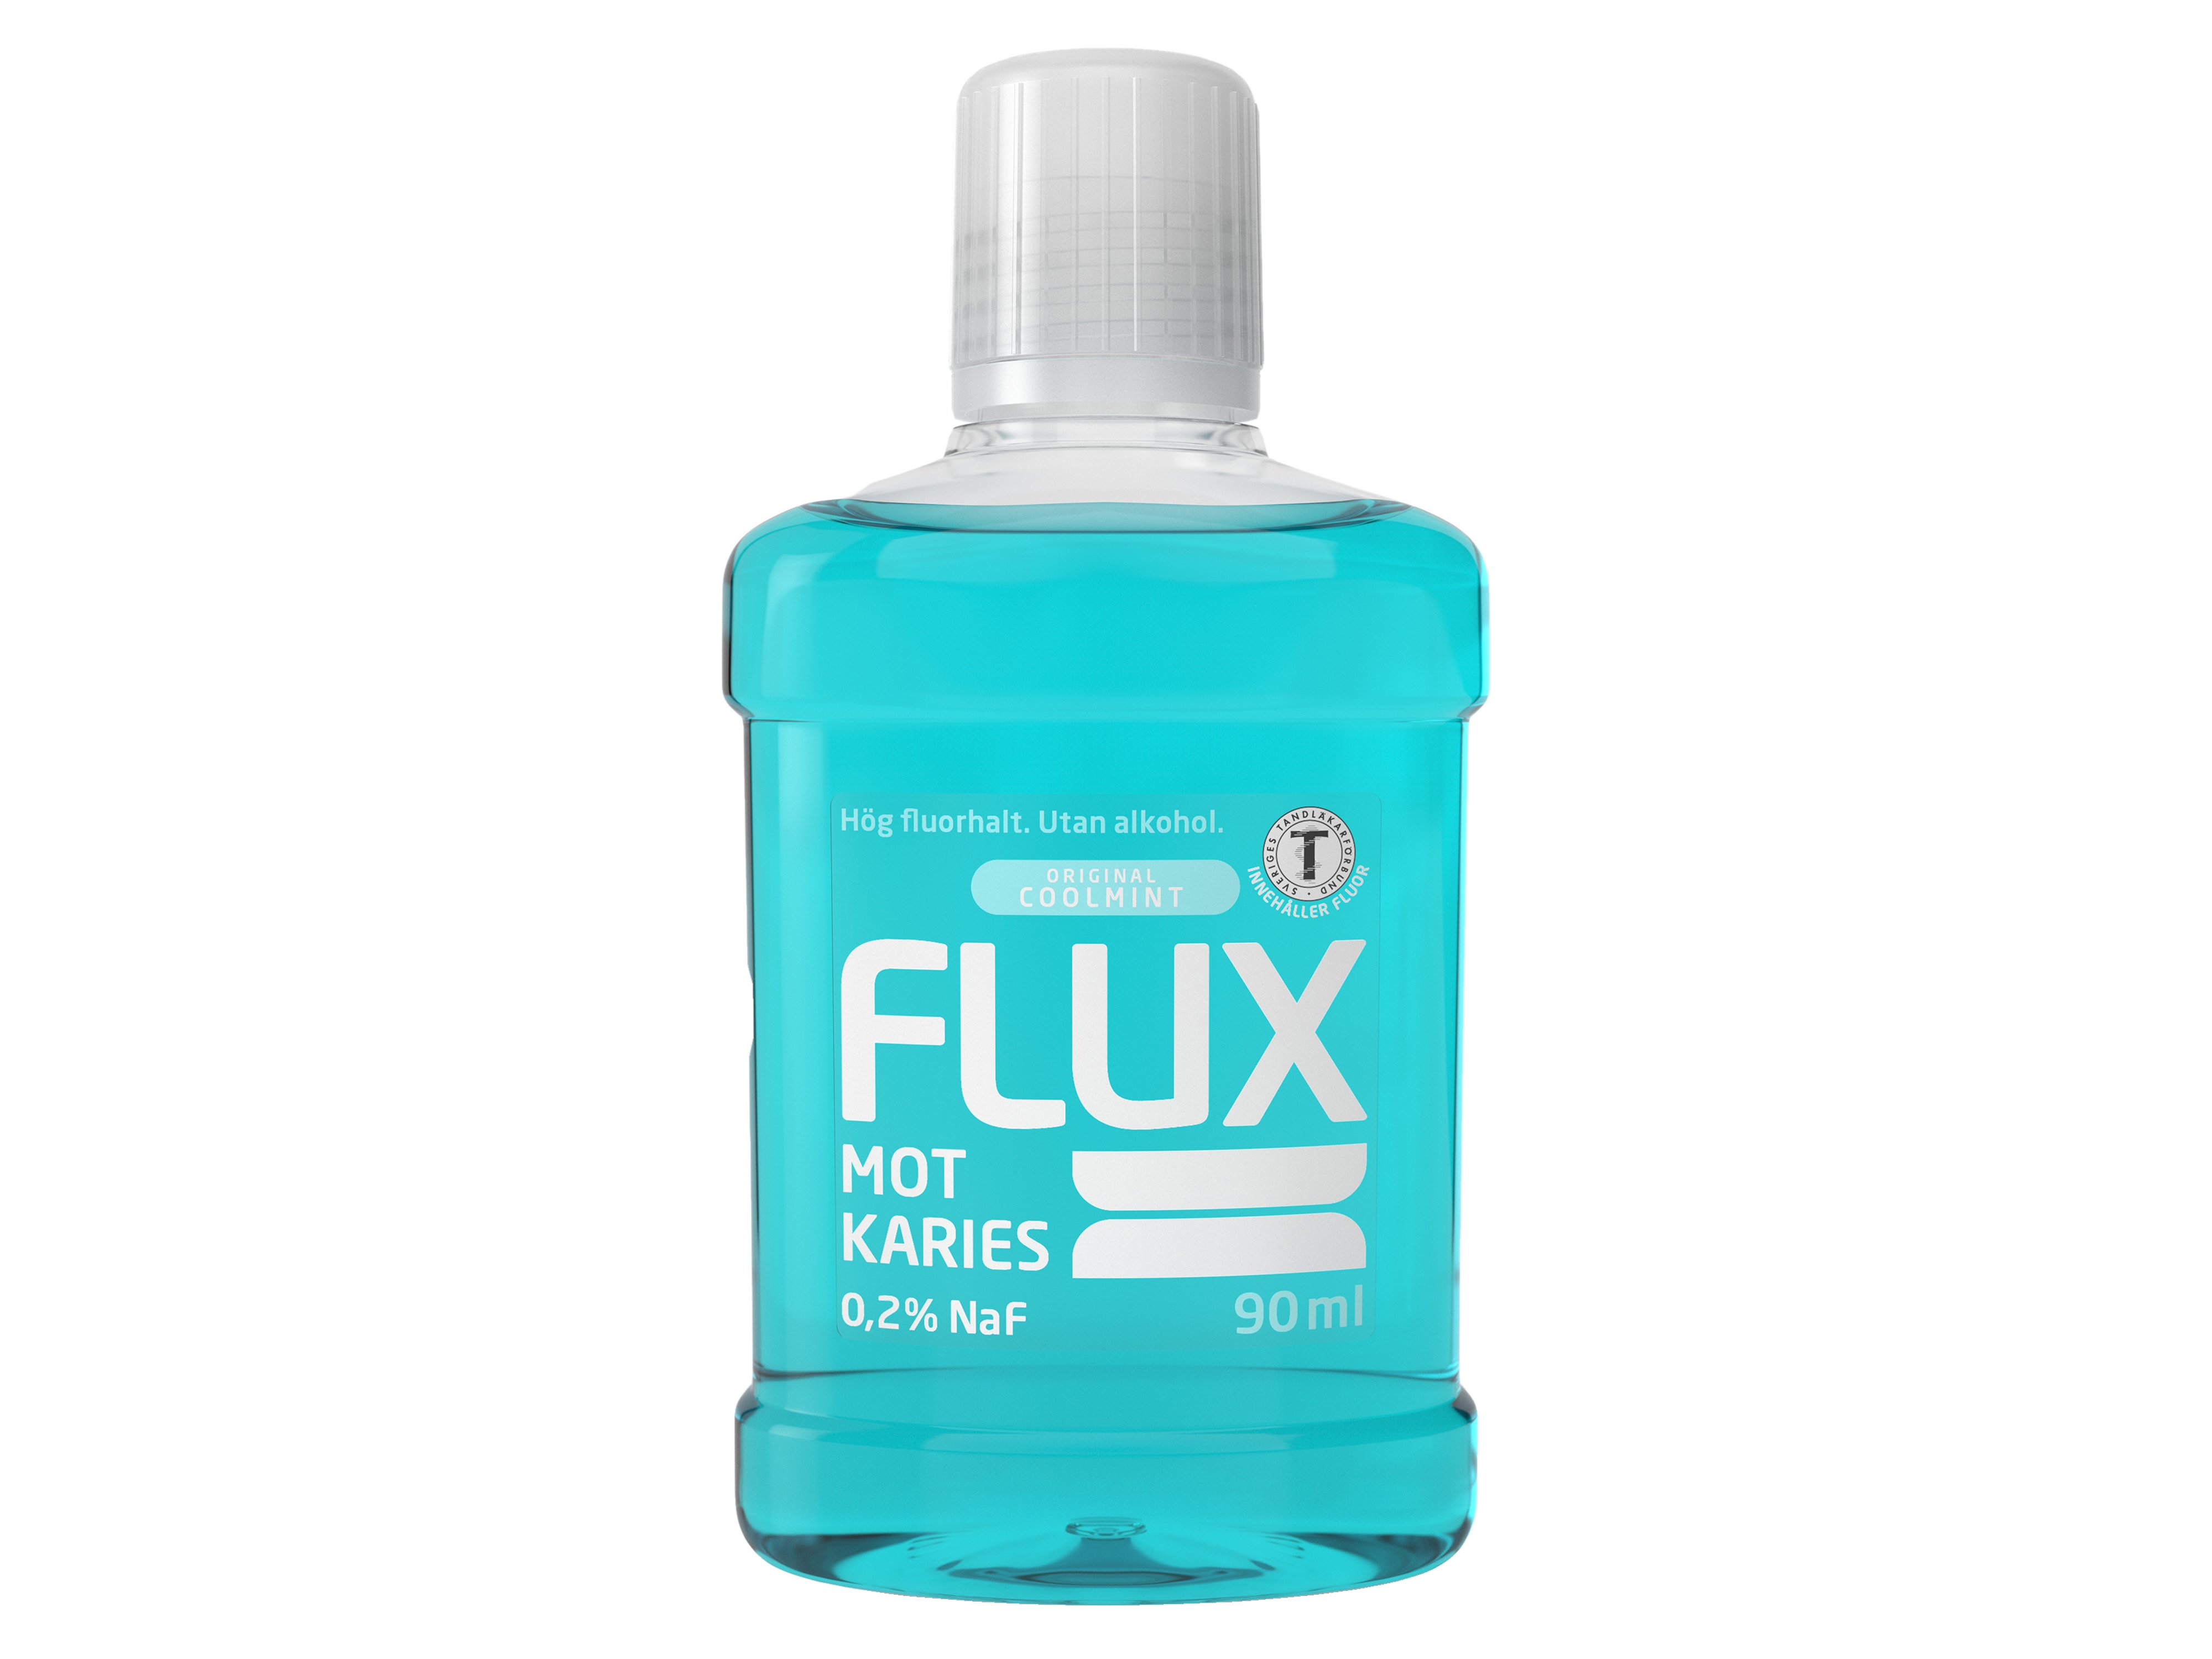 Flux Fluorskyll 0,2% Original Coolmint, 90 ml